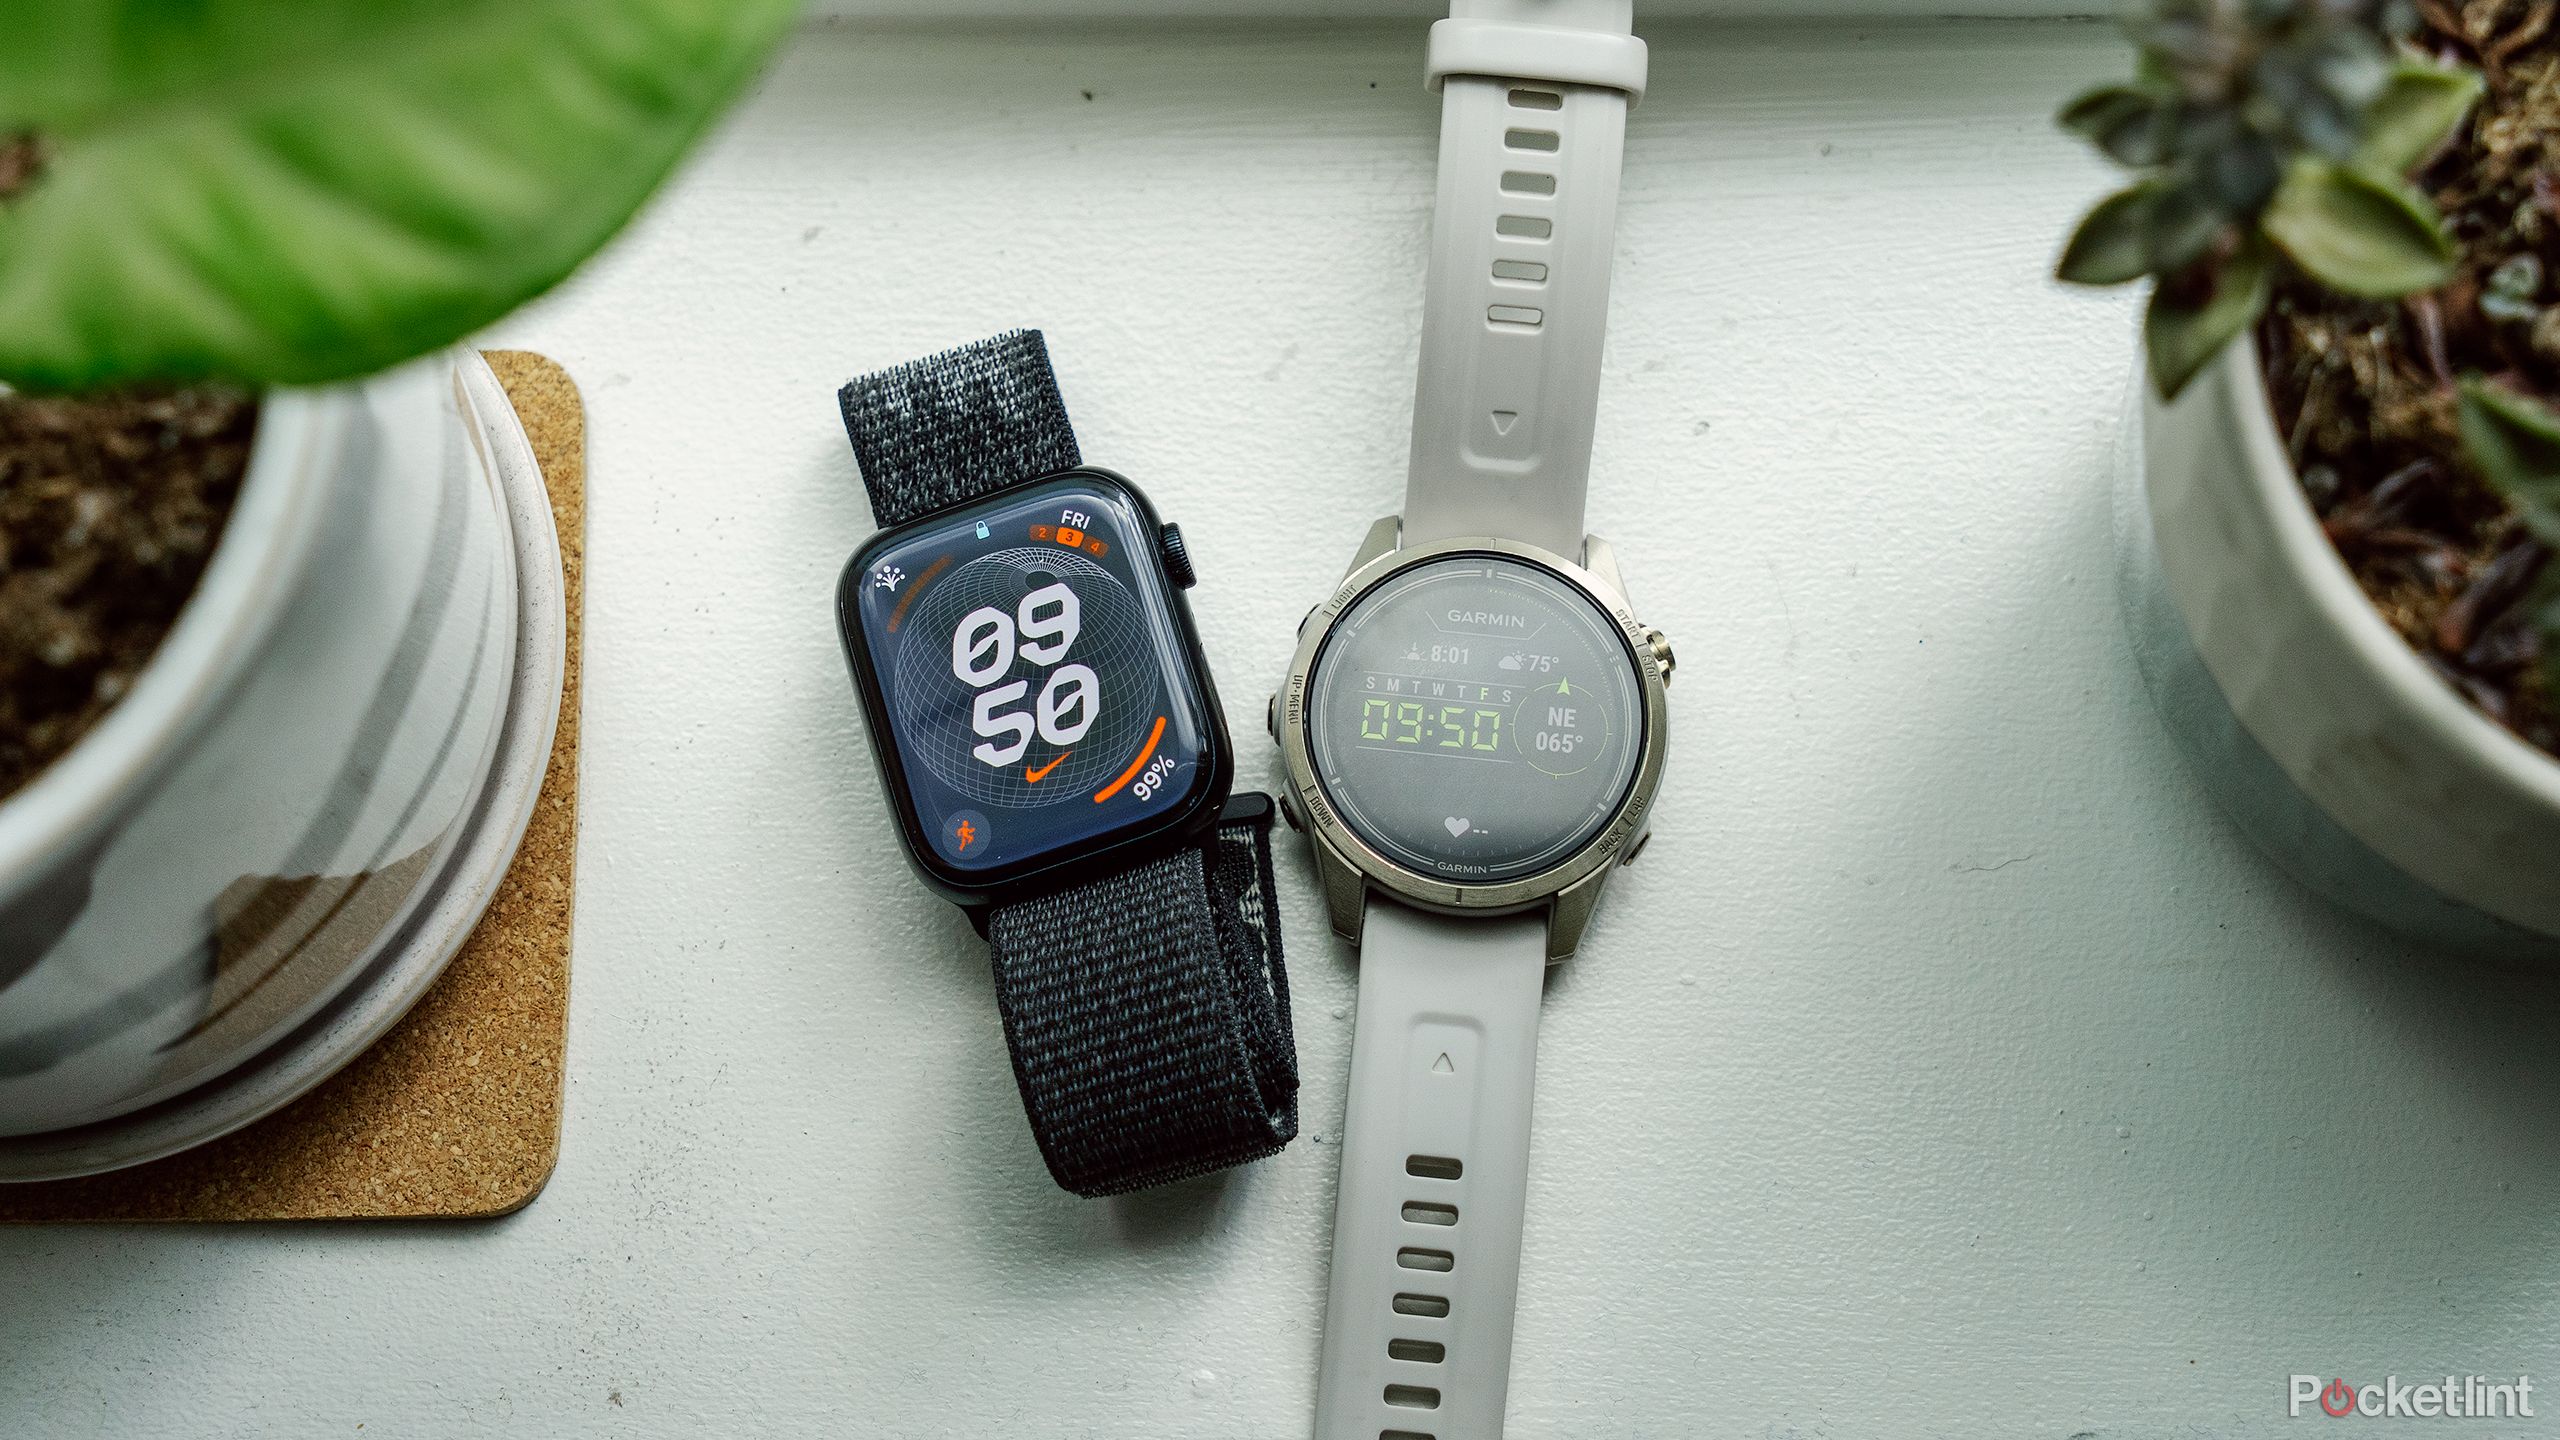 5 reasons why I use a Garmin tracker over an Apple Watch